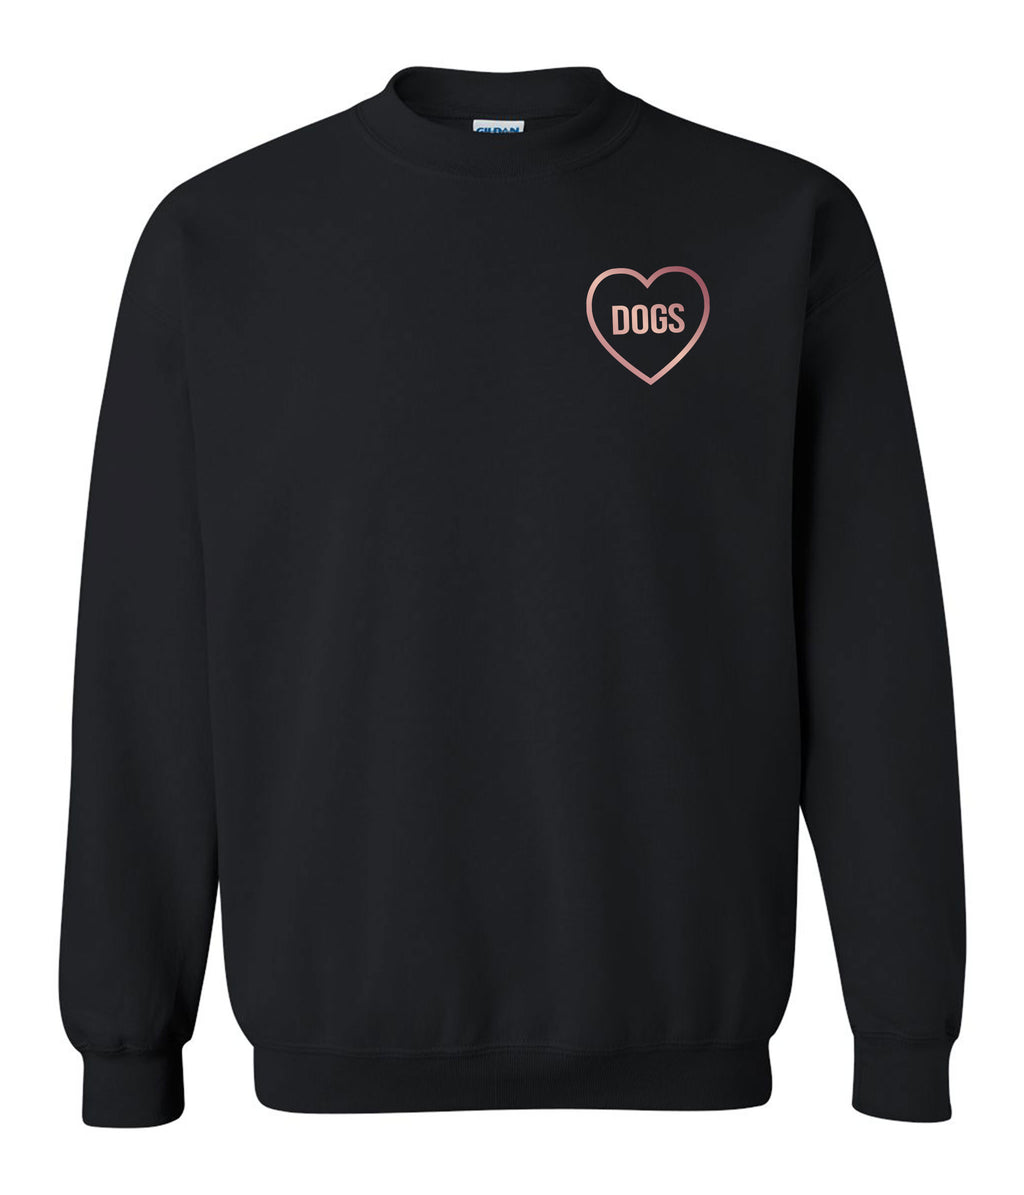 "Dogs" Rose Gold Heart Unisex Sweatshirt